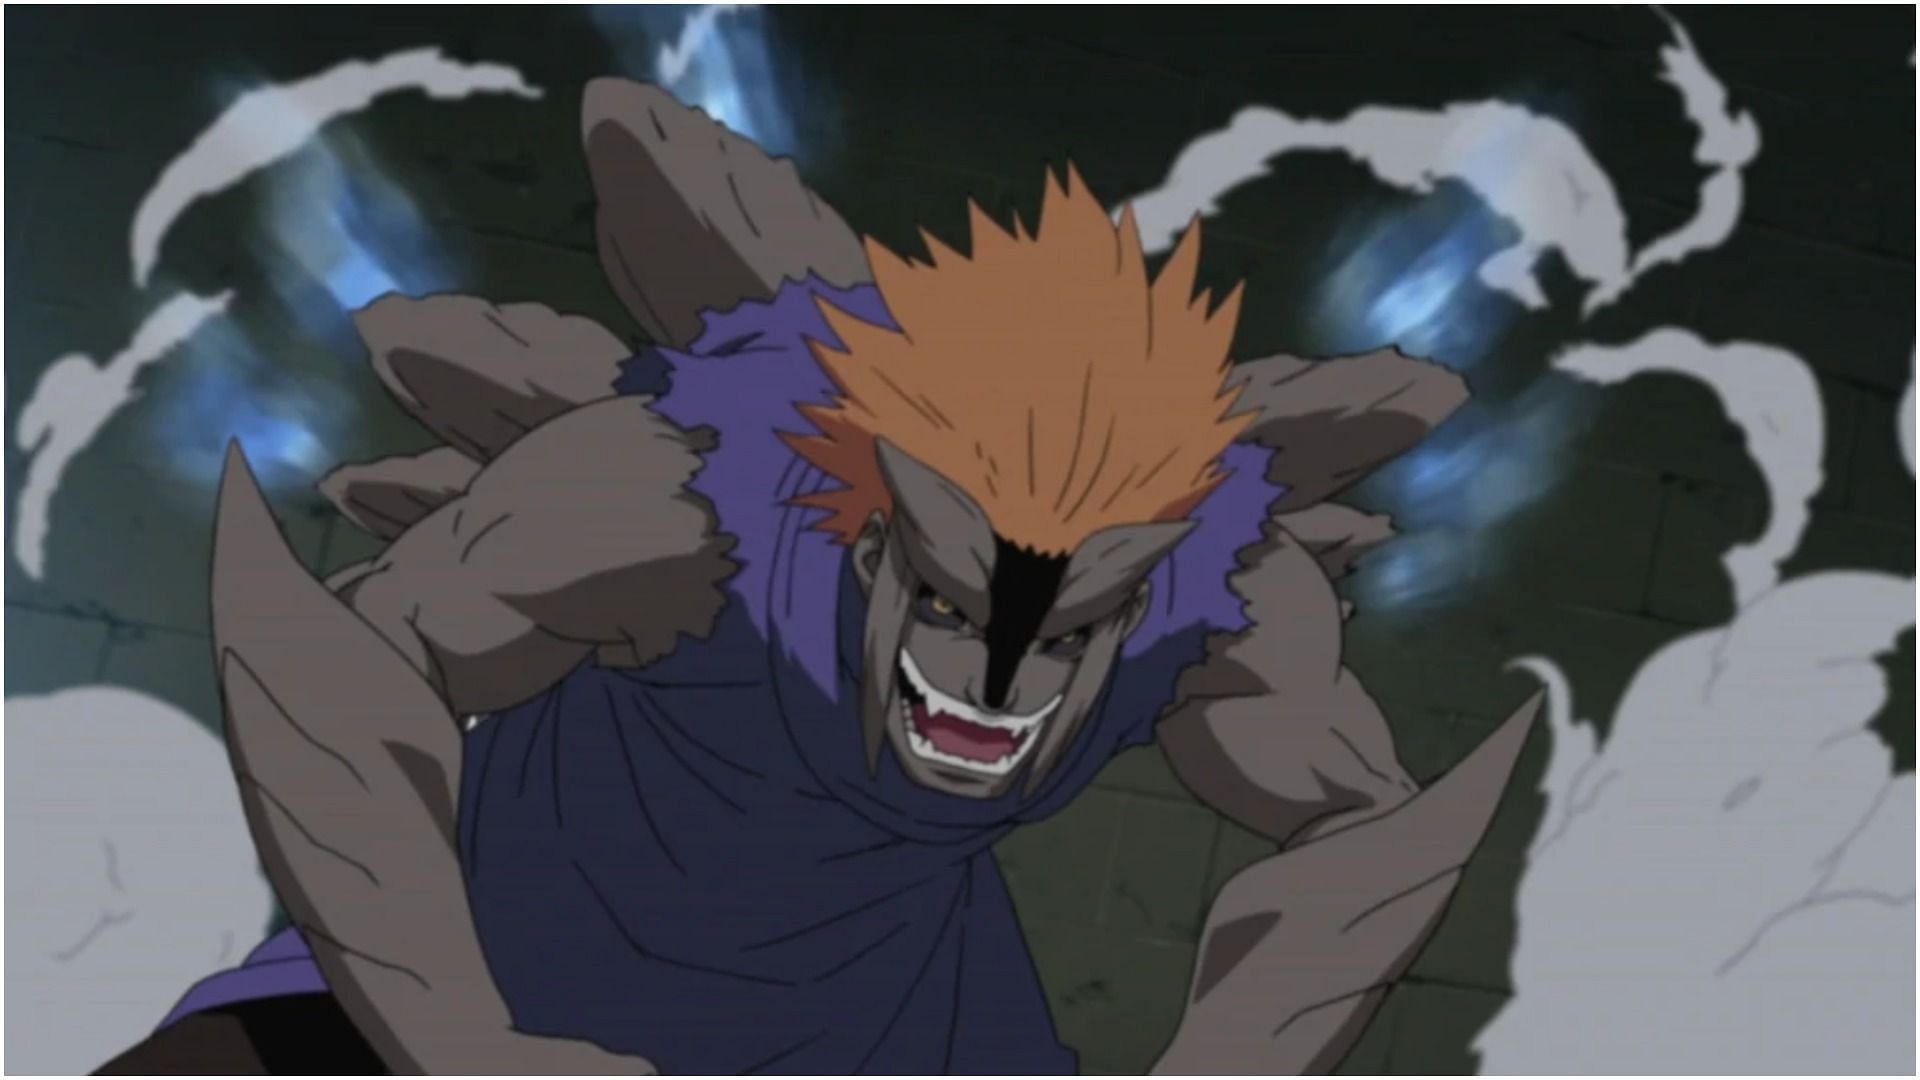 Jūgo's Sage Mode as seen in the anime Naruto (Image via Studio Pierrot)